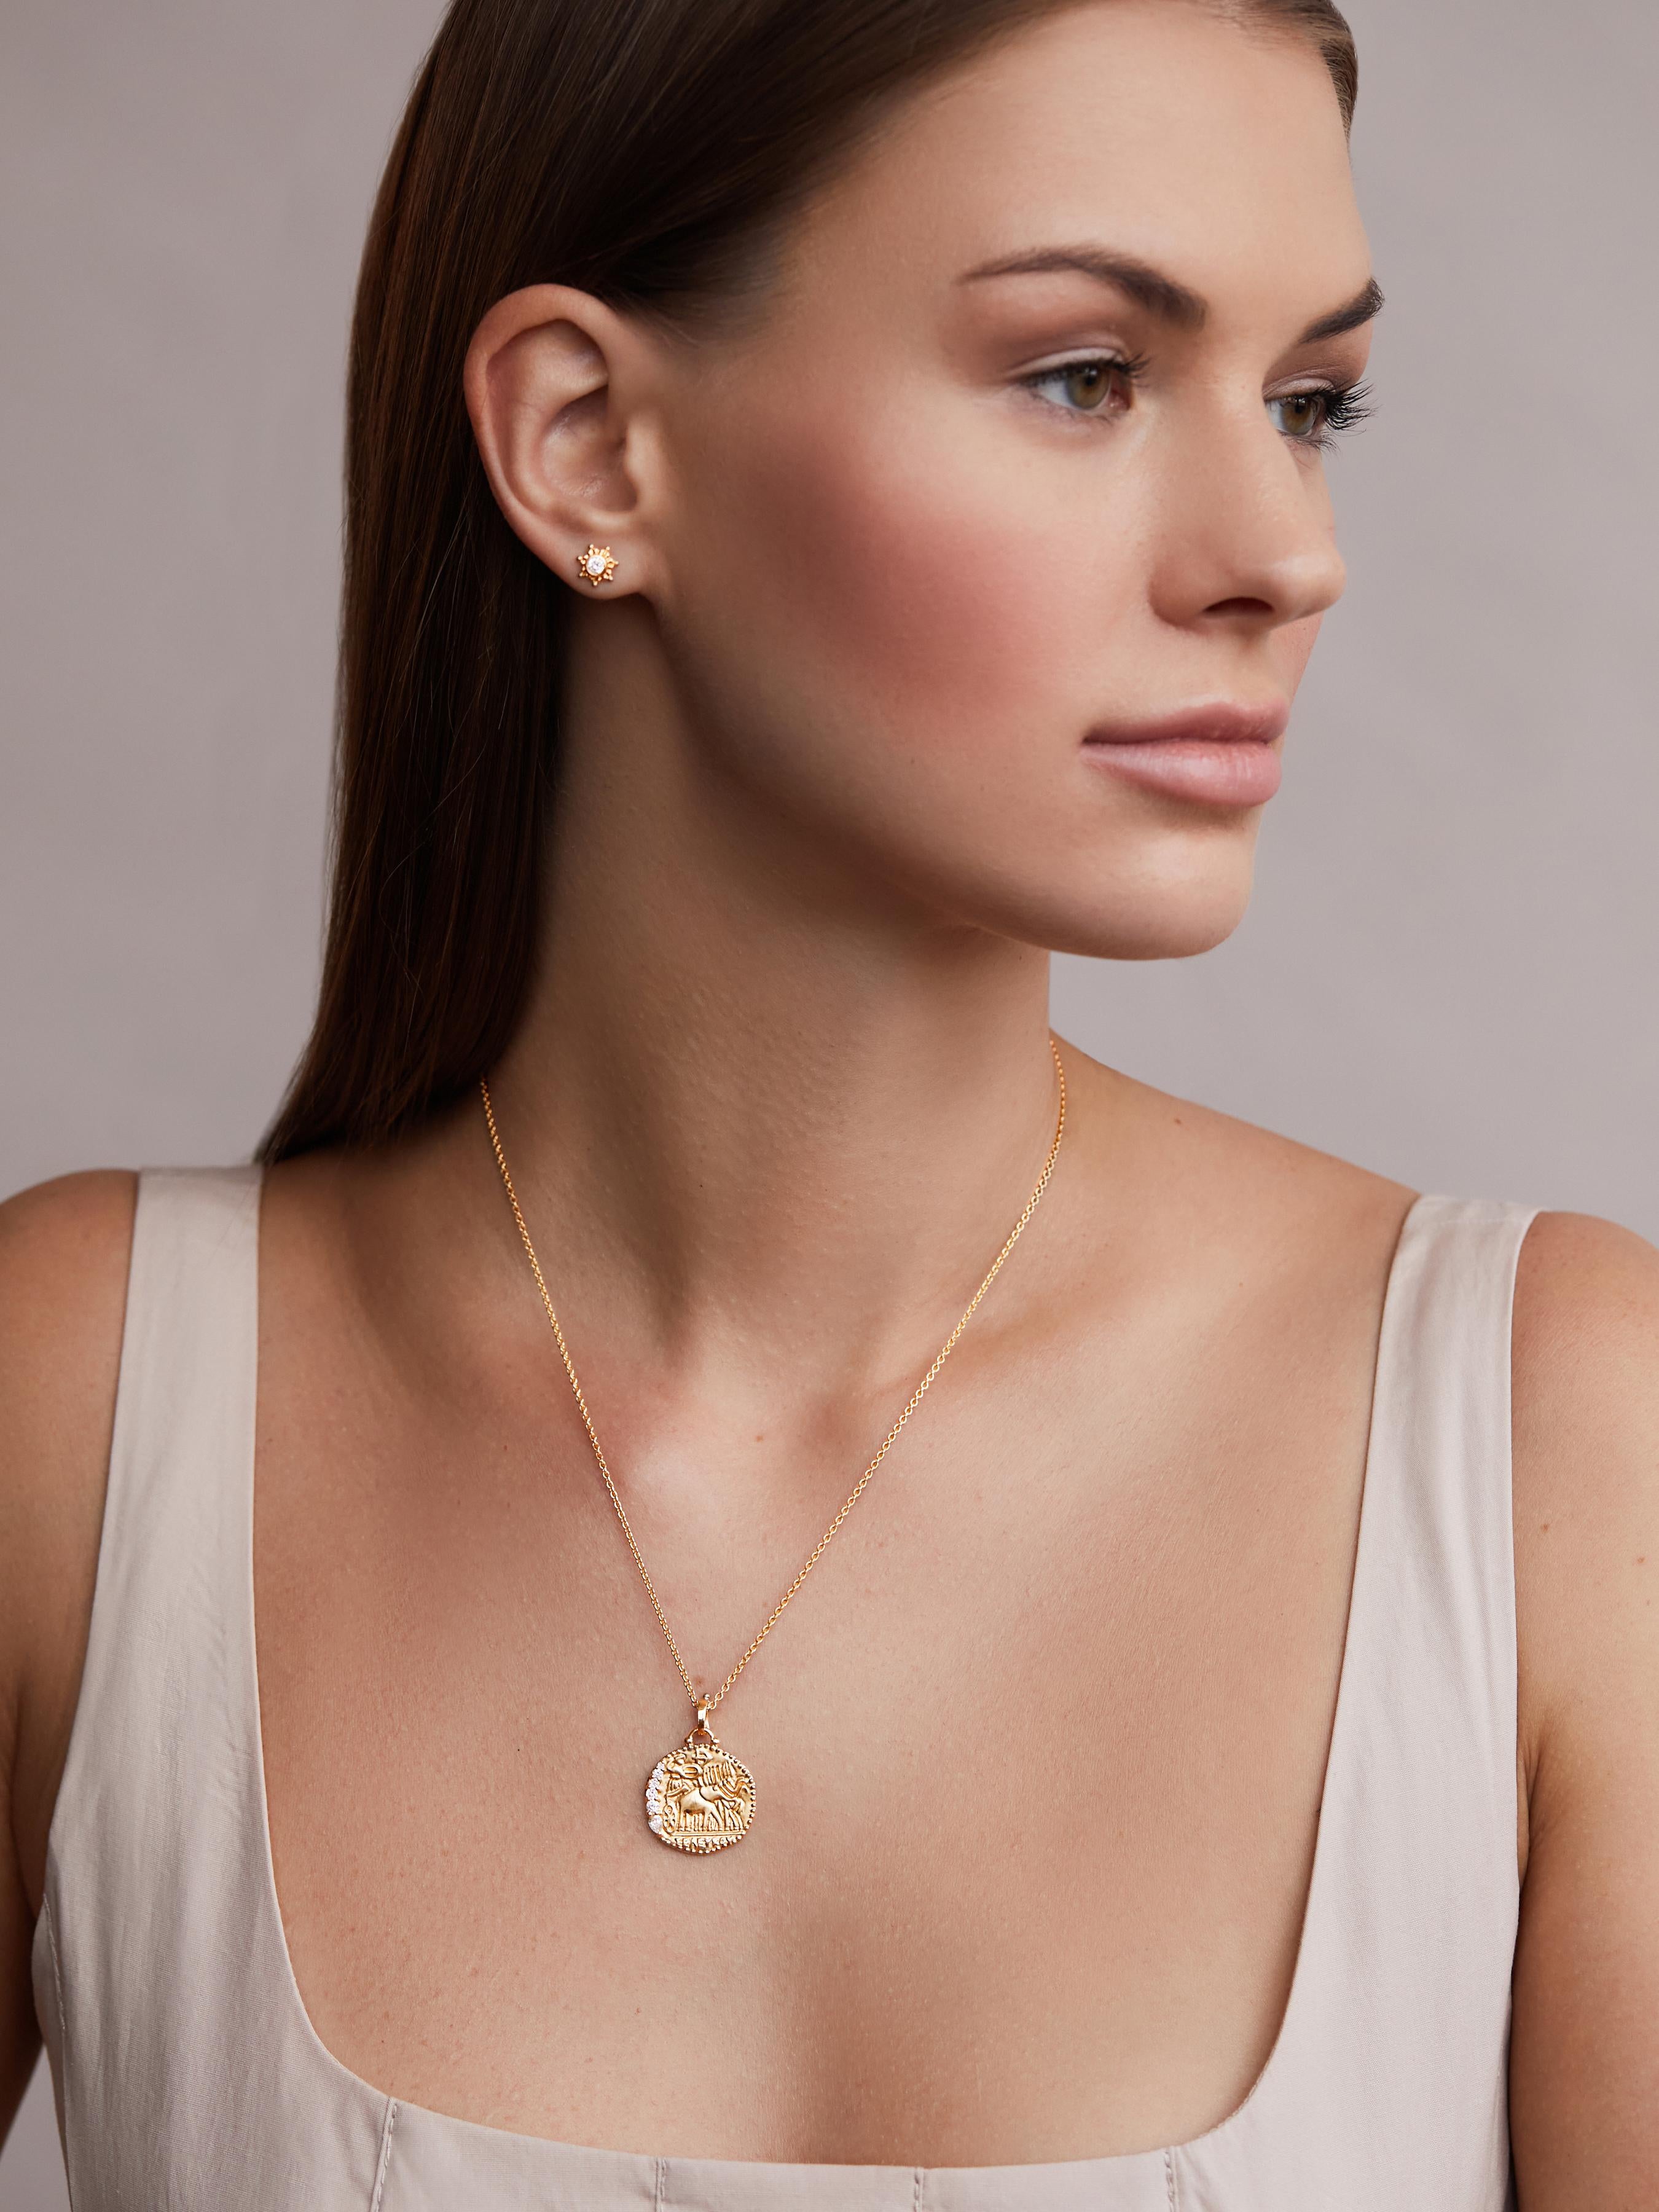 kaitlan collins gold medallion necklace